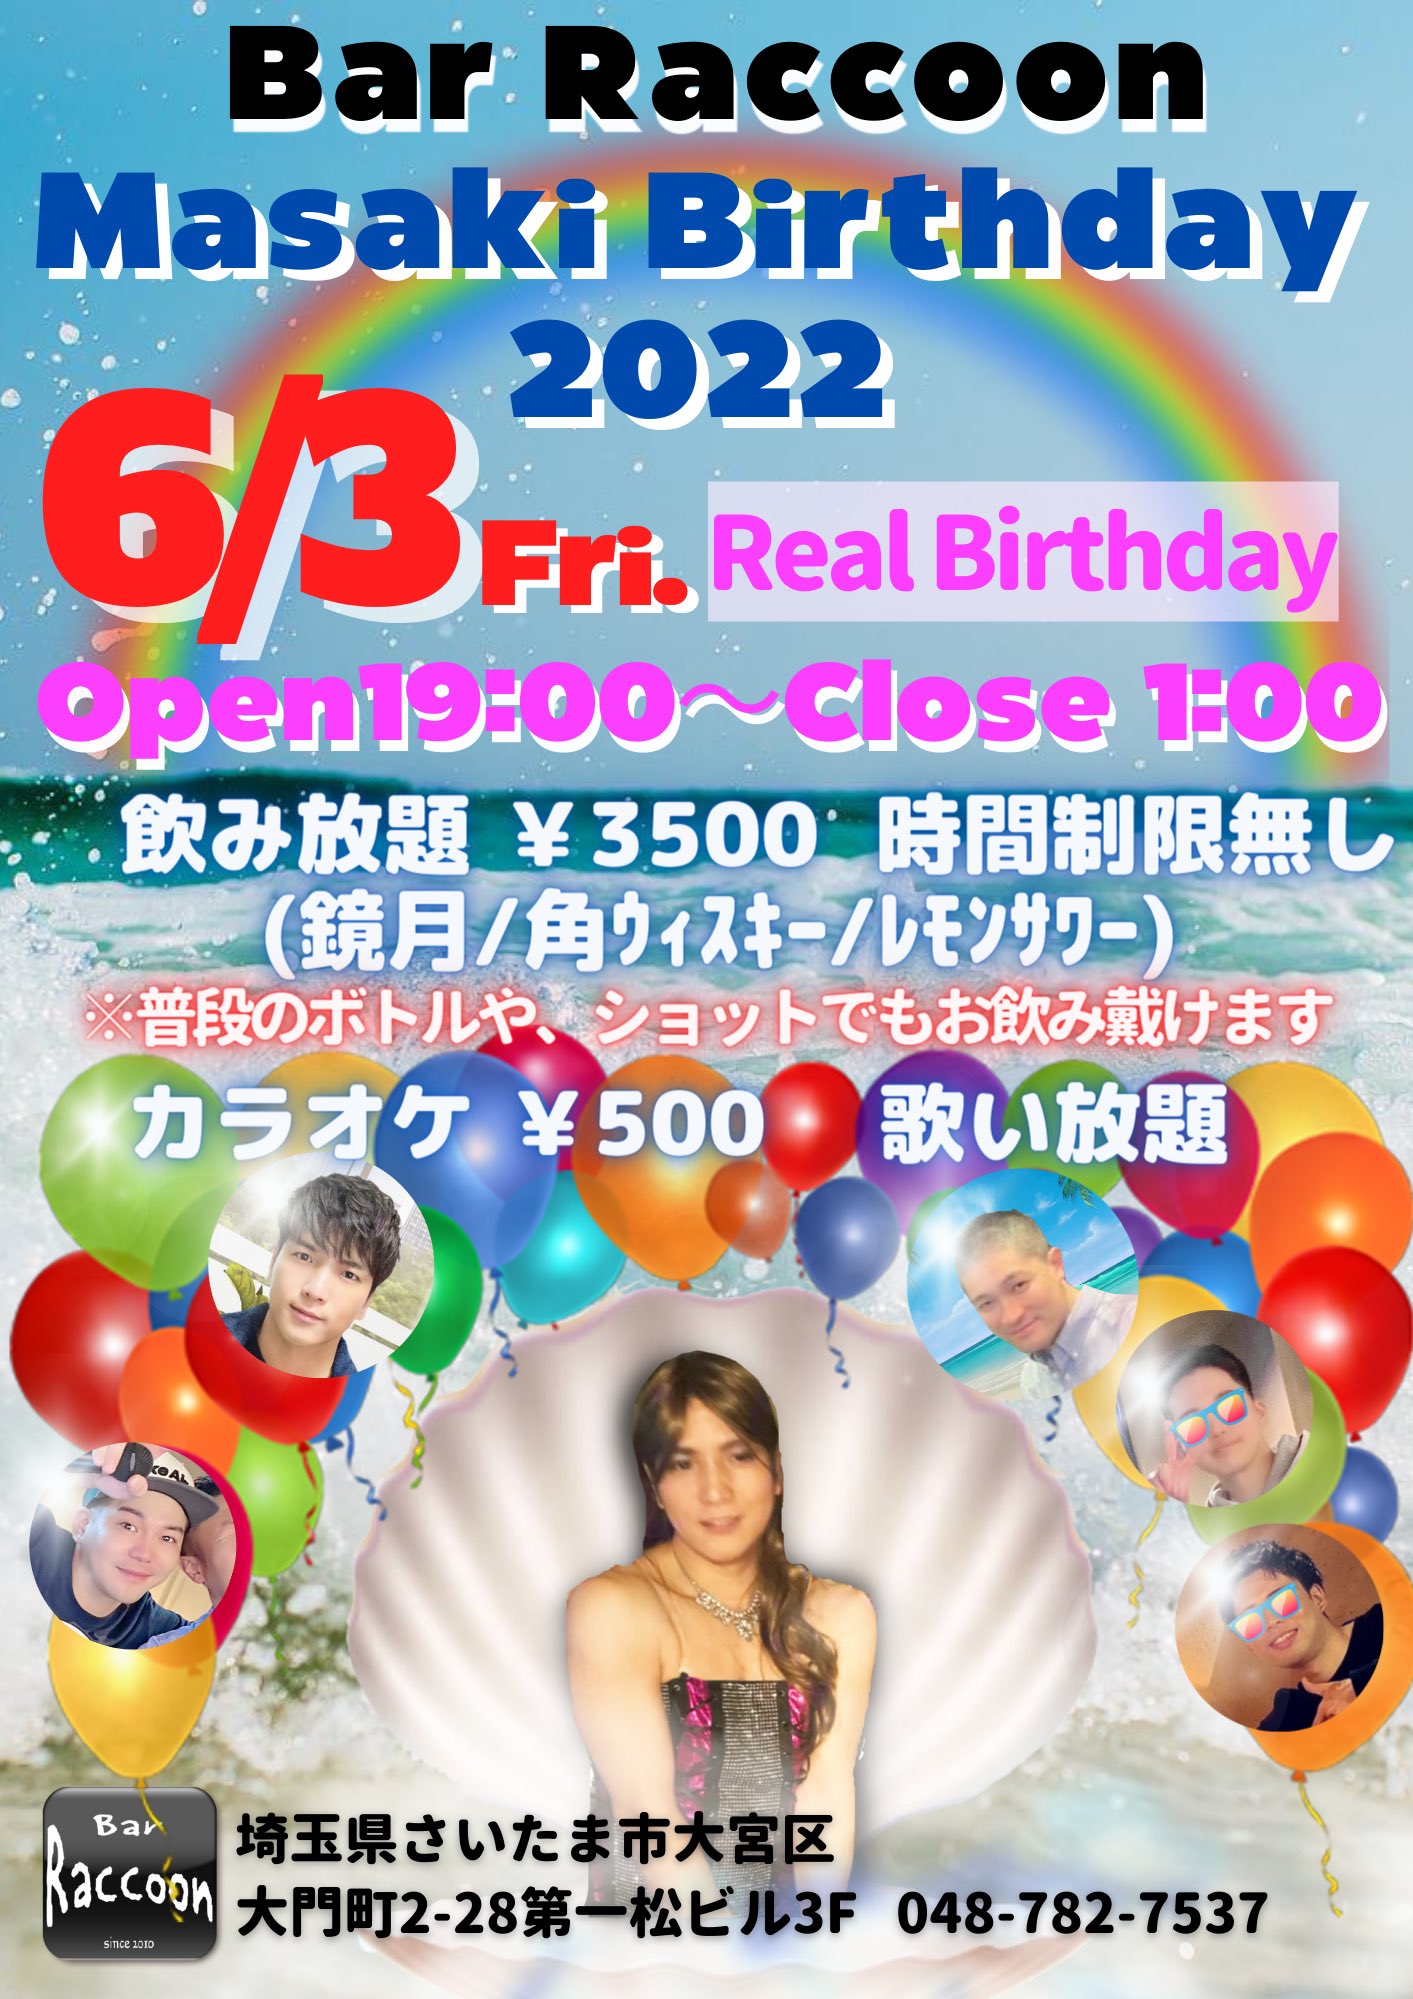 Masaki Real Birthday